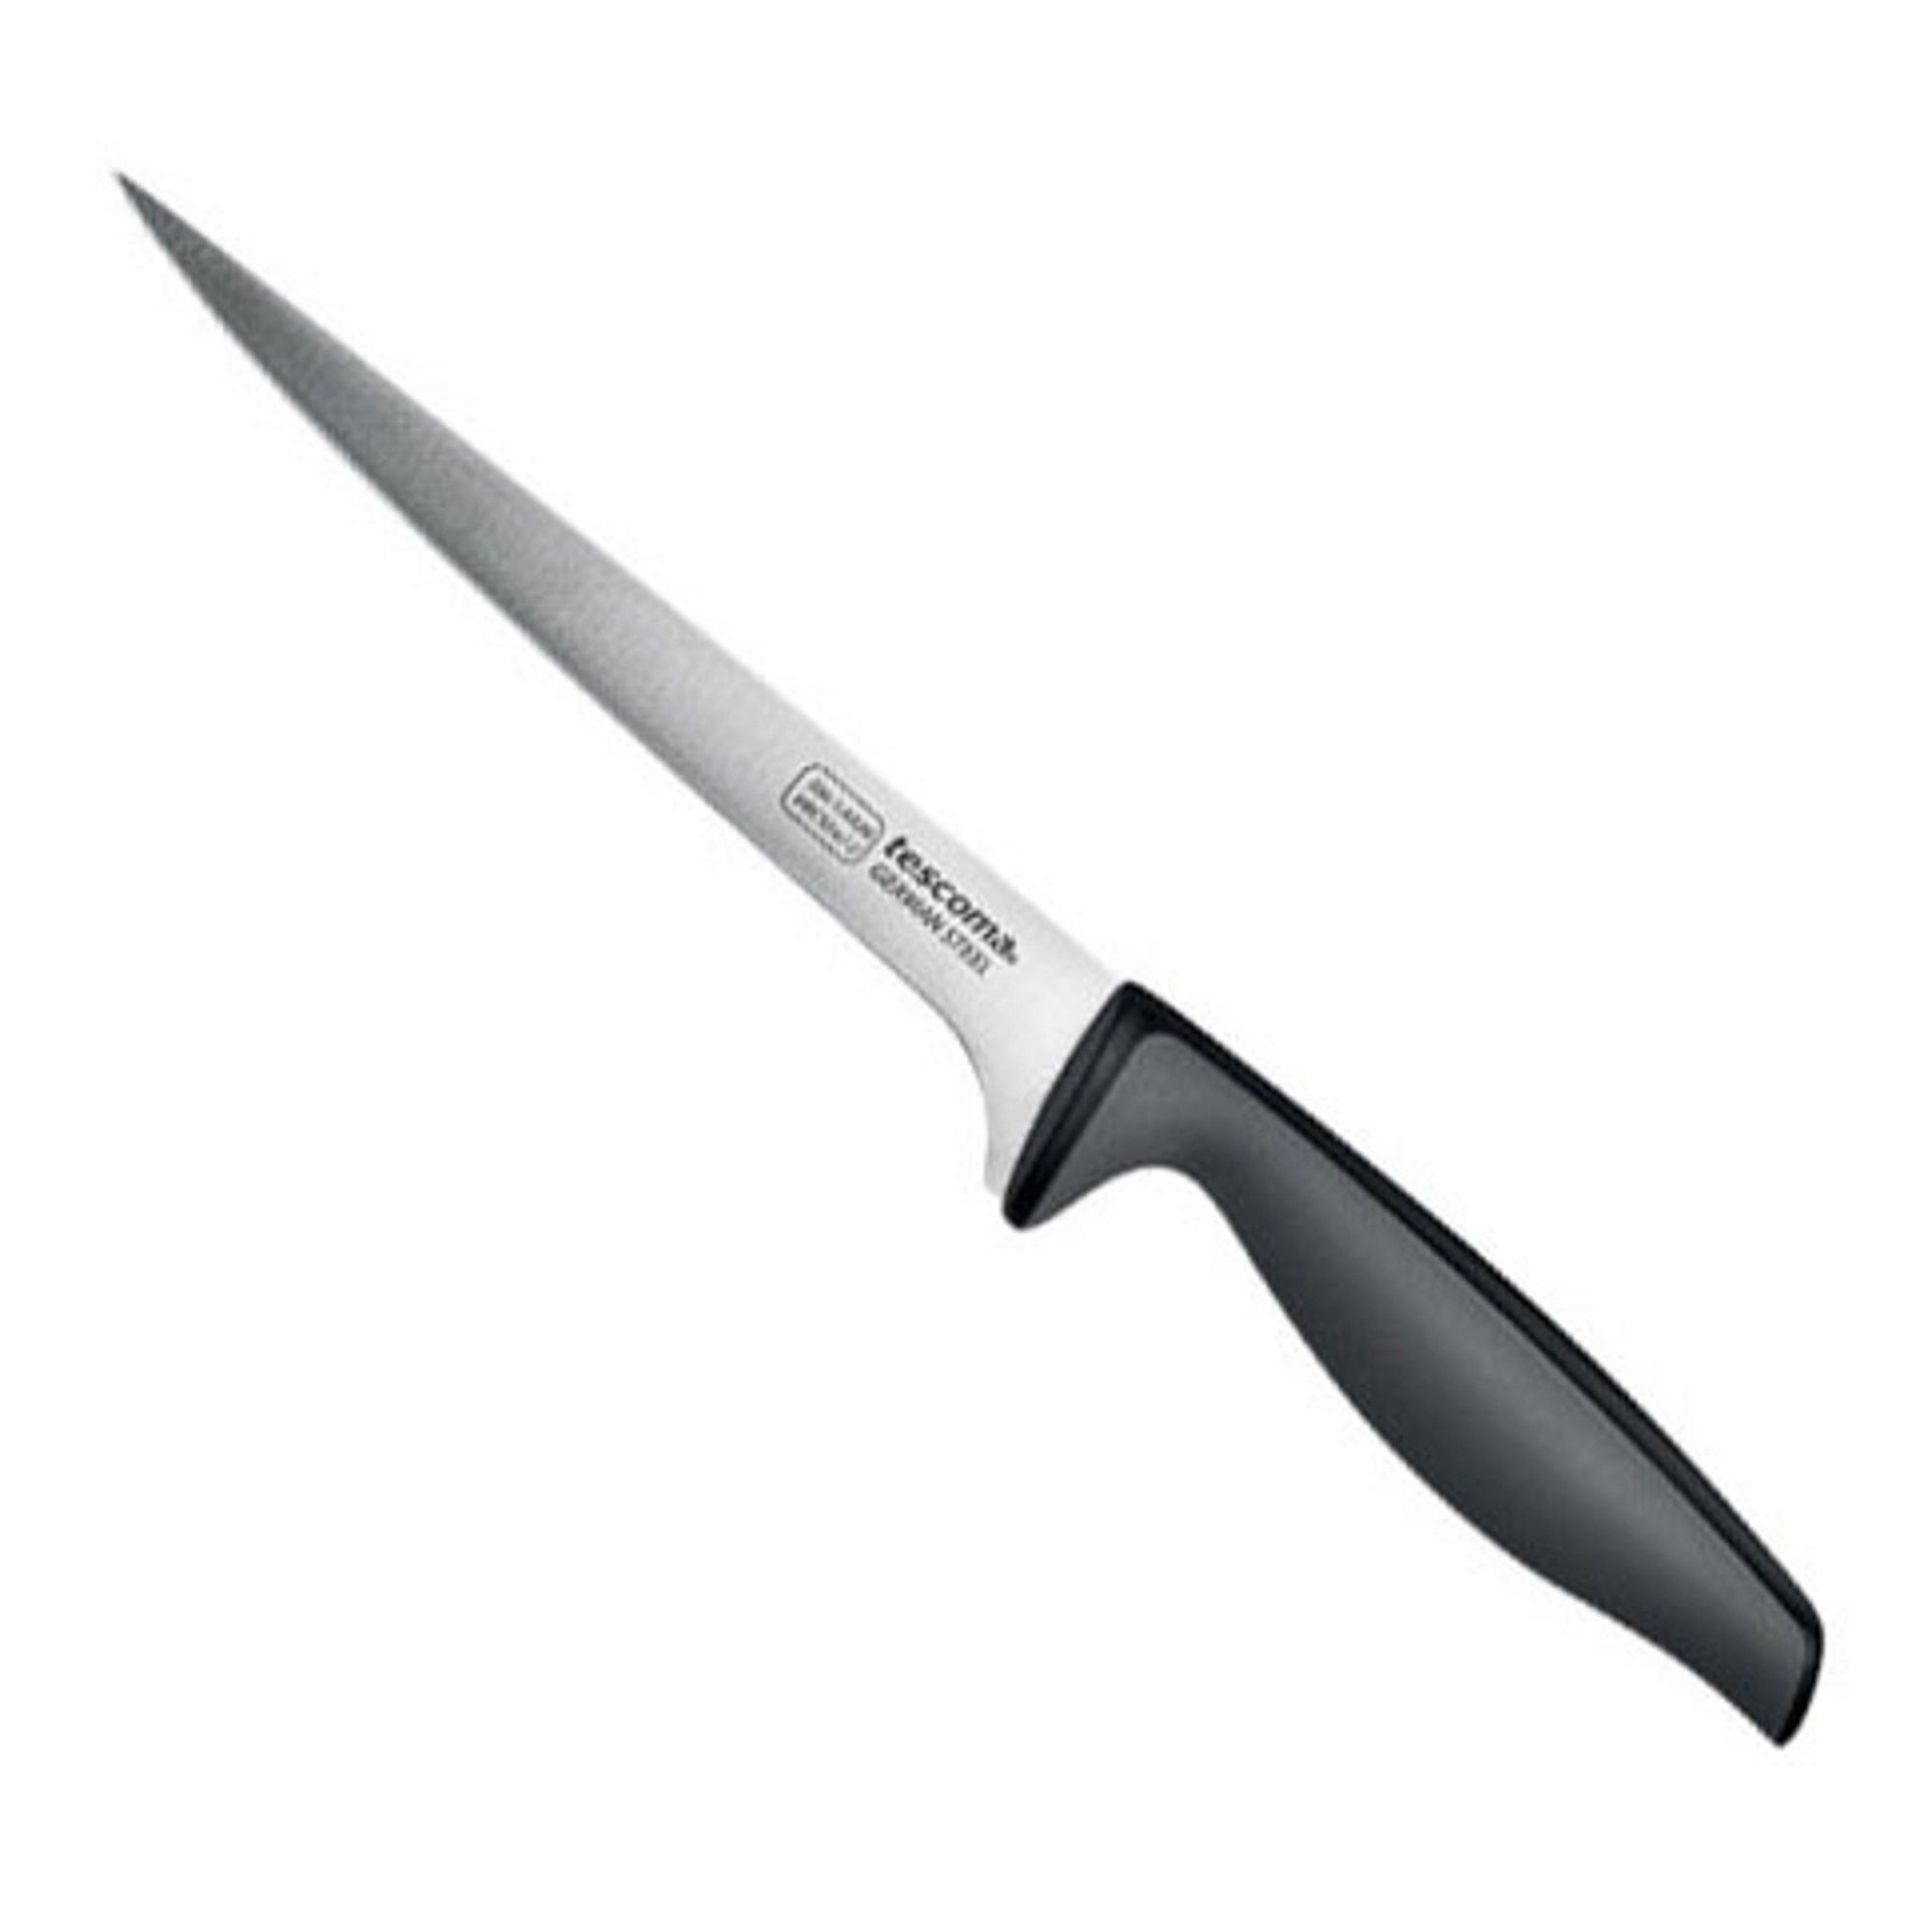 Нож Tescoma обвалочный precioso 16 см - фото 1